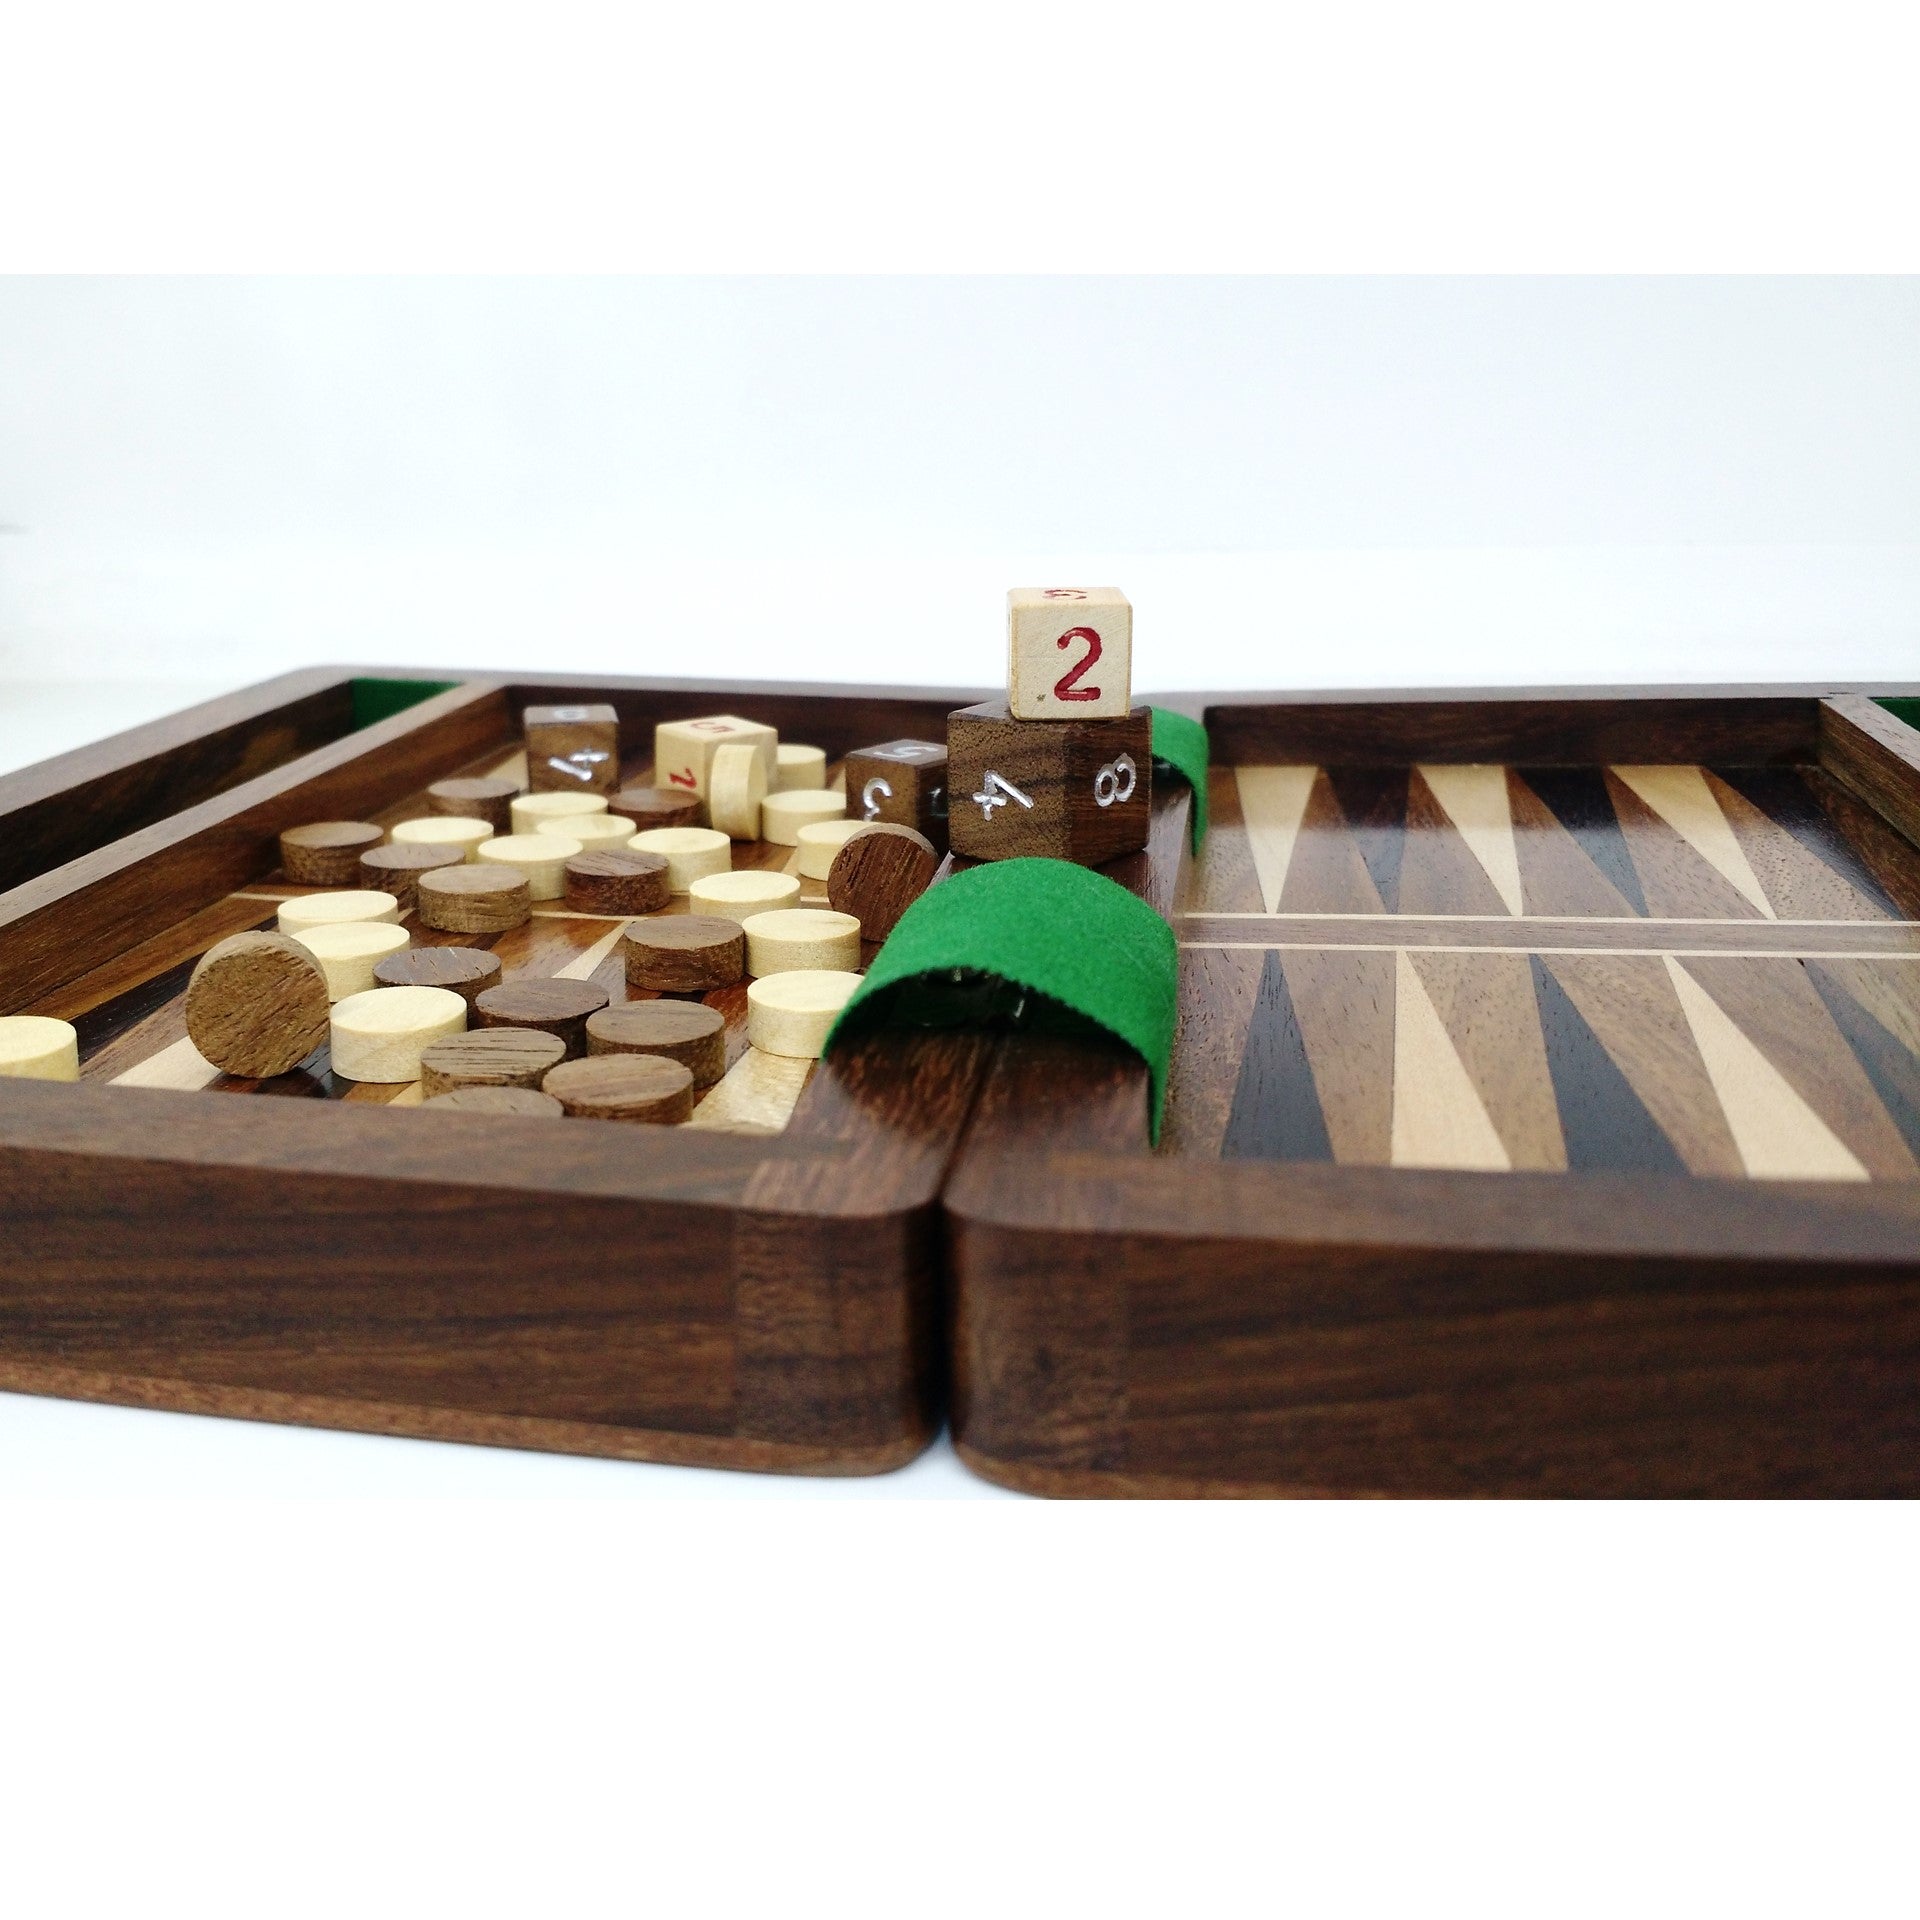  Wooden Travel Backgammon Set